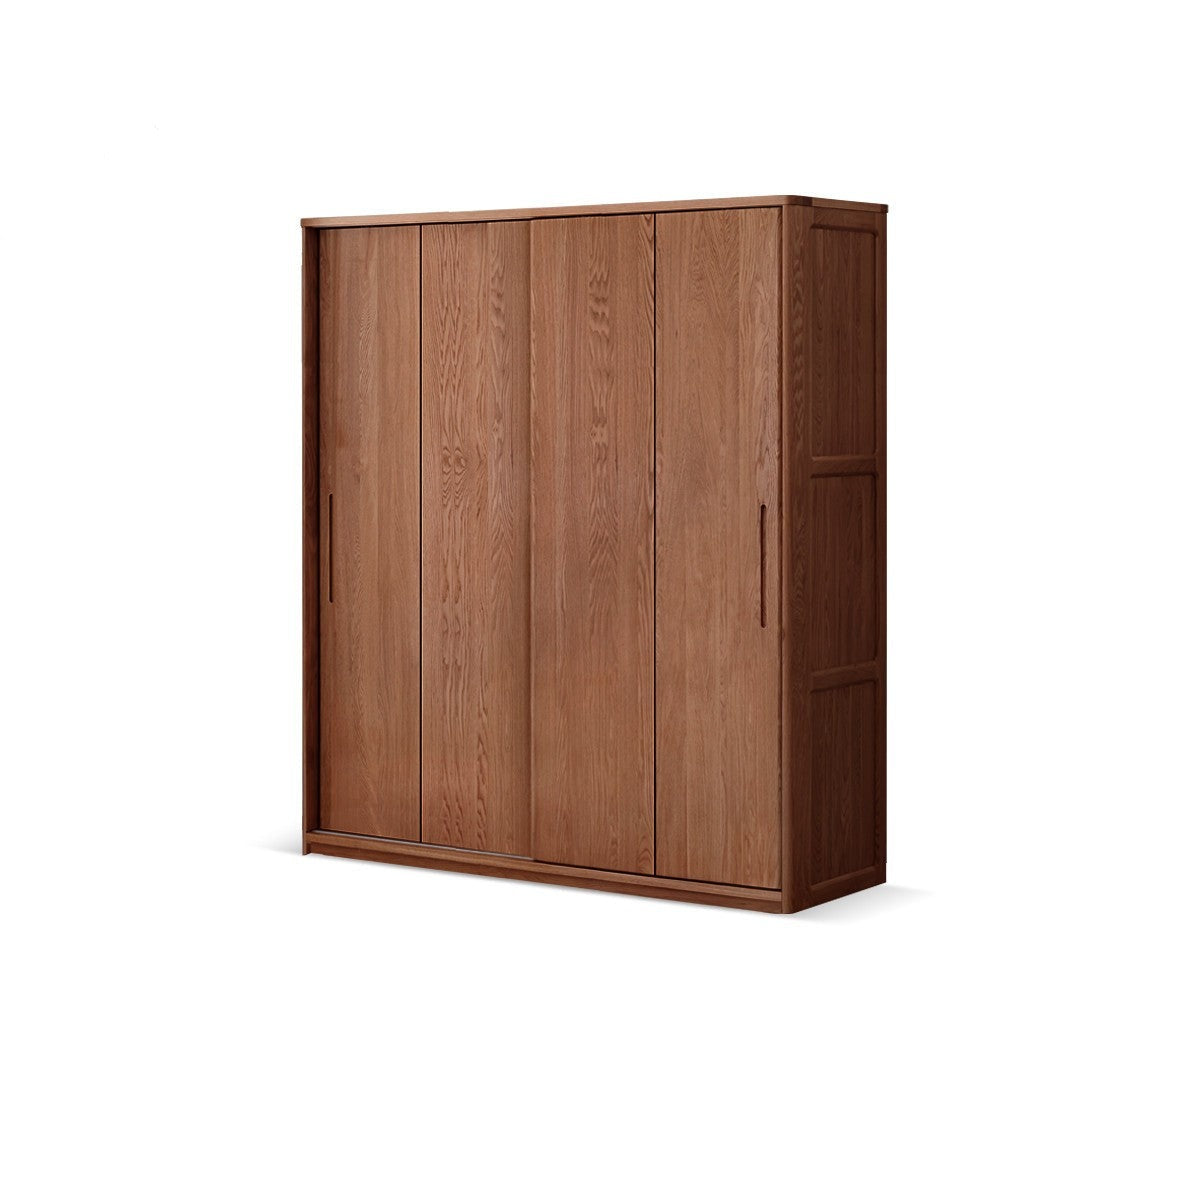 Oak, Ash solid wood wardrobe sliding door"